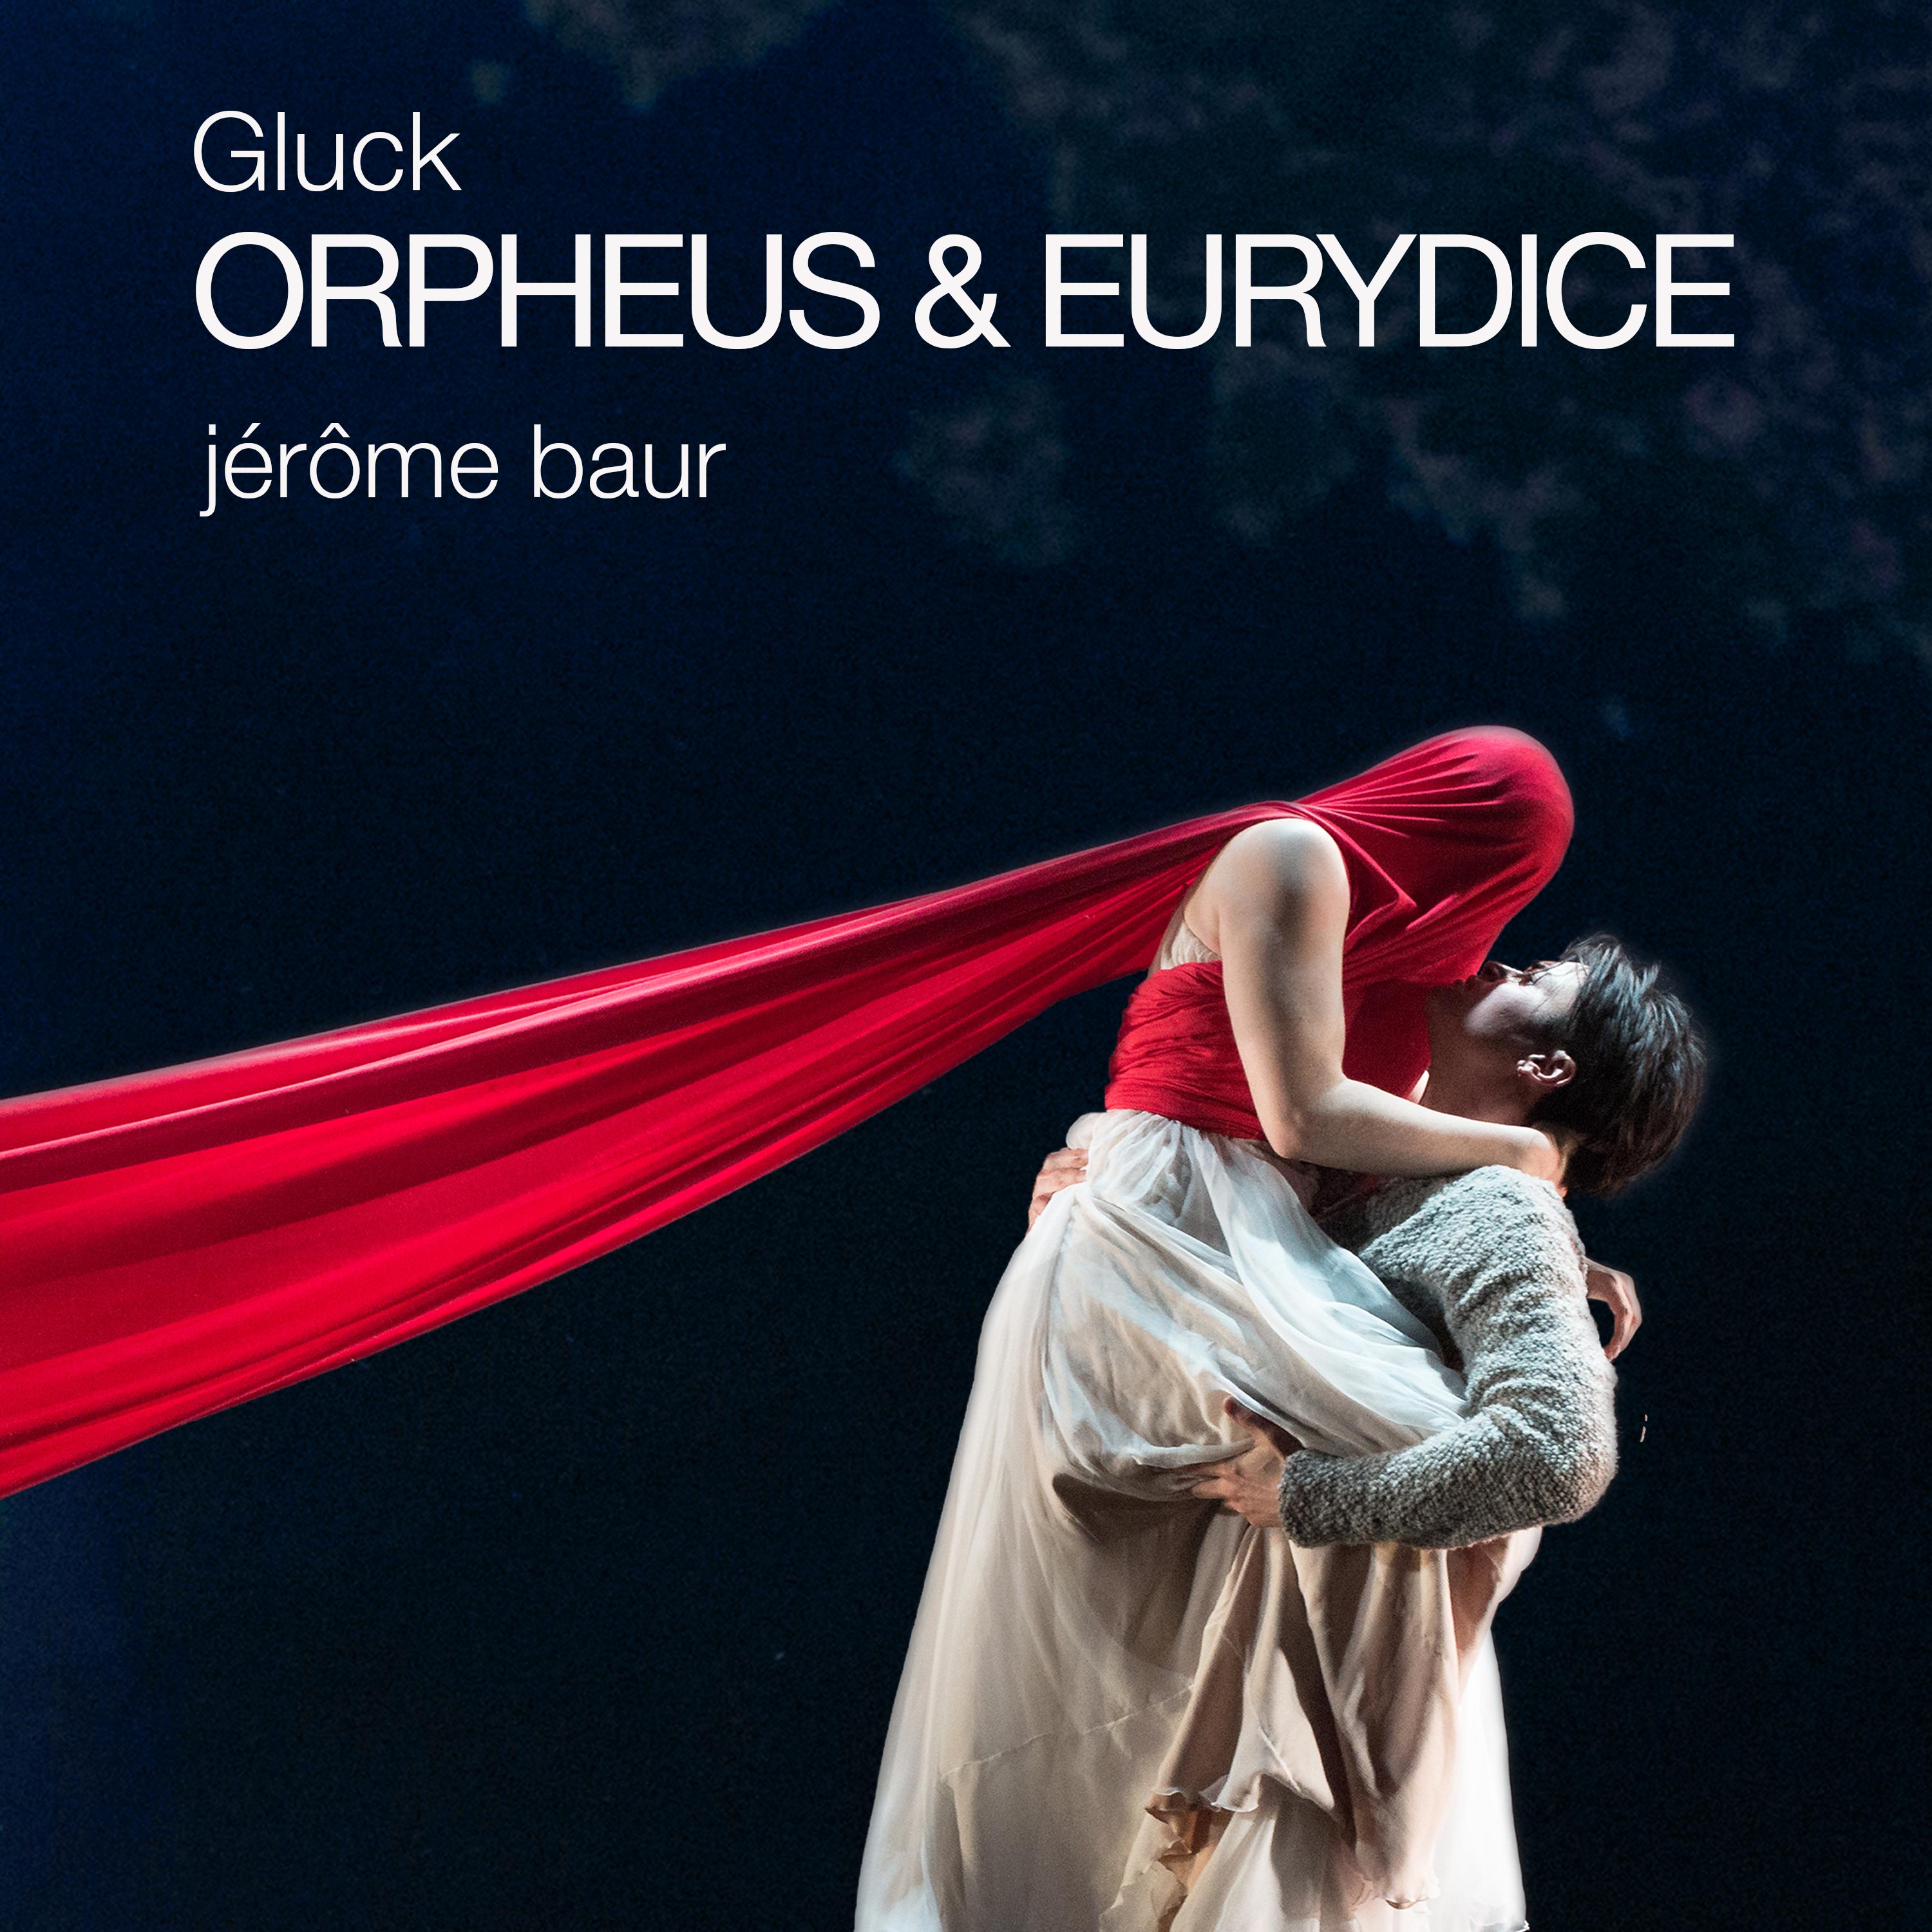 Opera - Orpheus & Eurydice (Gluck) by Jerome Baur